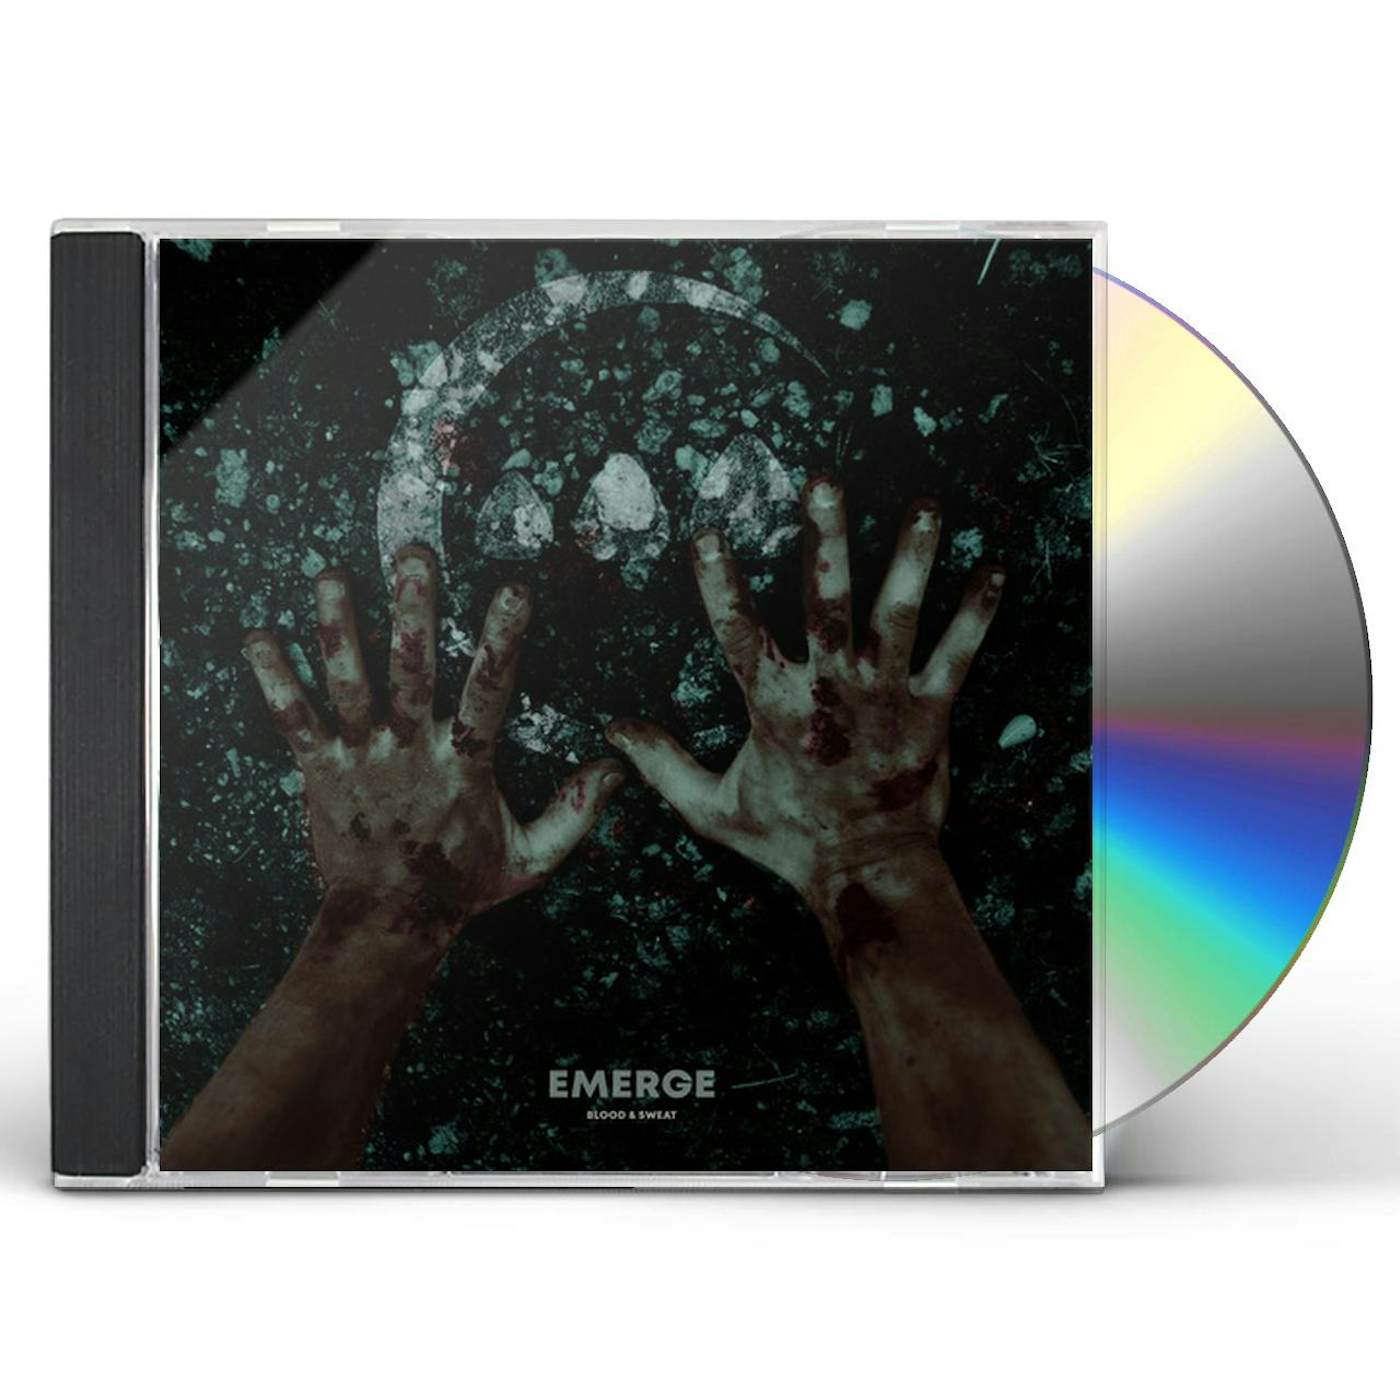 Emerge BLOOD & SWEAT CD